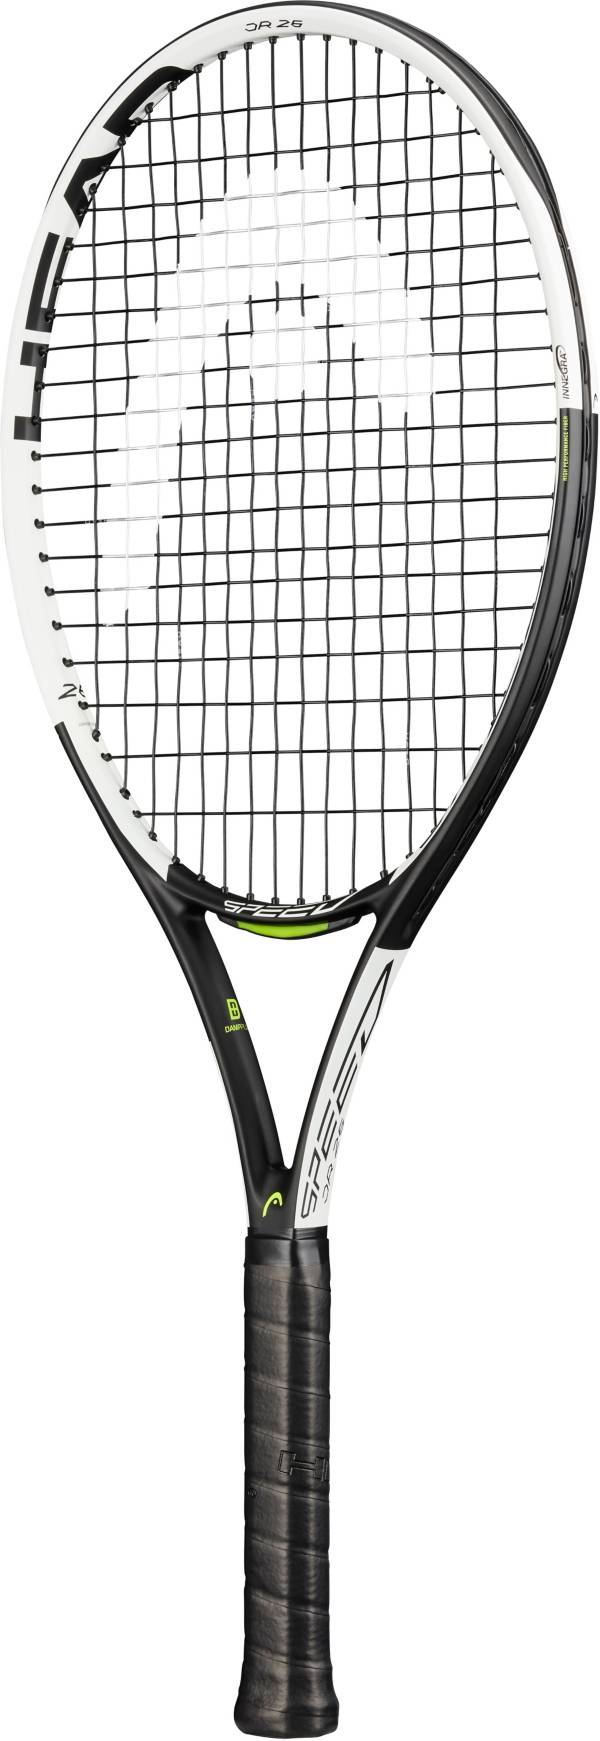 Grip: 1 to 4 Full Cover & 3 Championship Tennis Balls HEAD Power Balance 6 Graphite Tennis Racket 